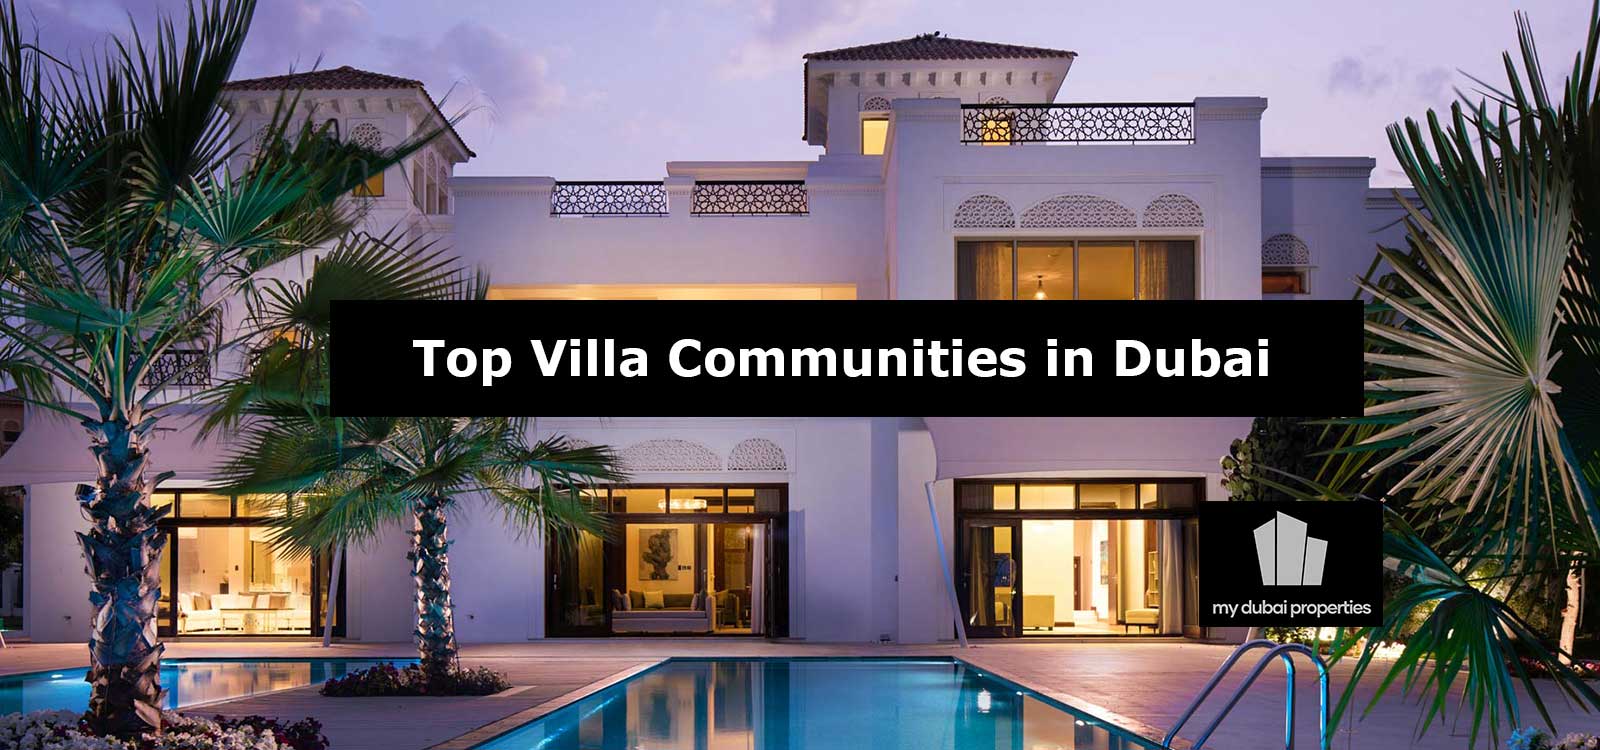 Top Villa Communities in Dubai